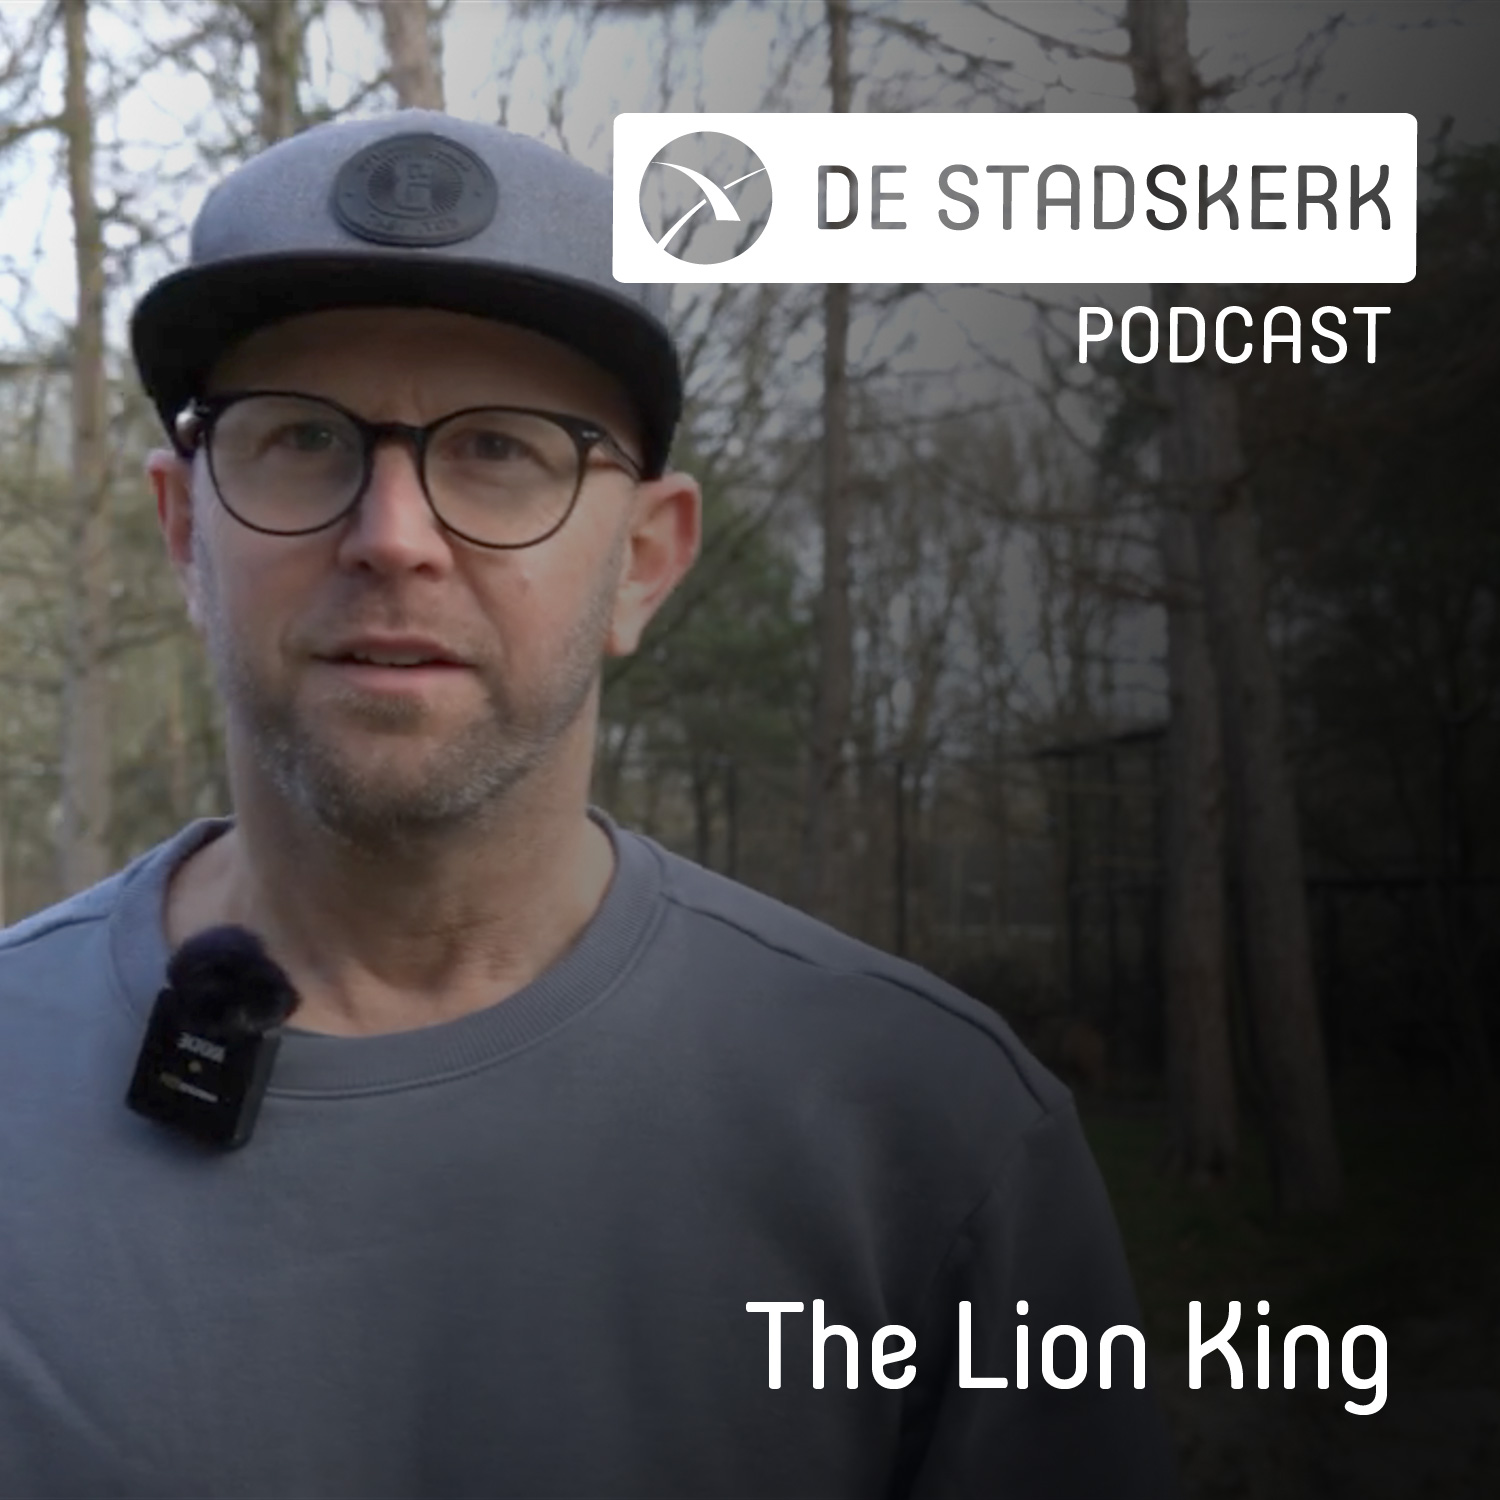 The Lion King | André van Zyl